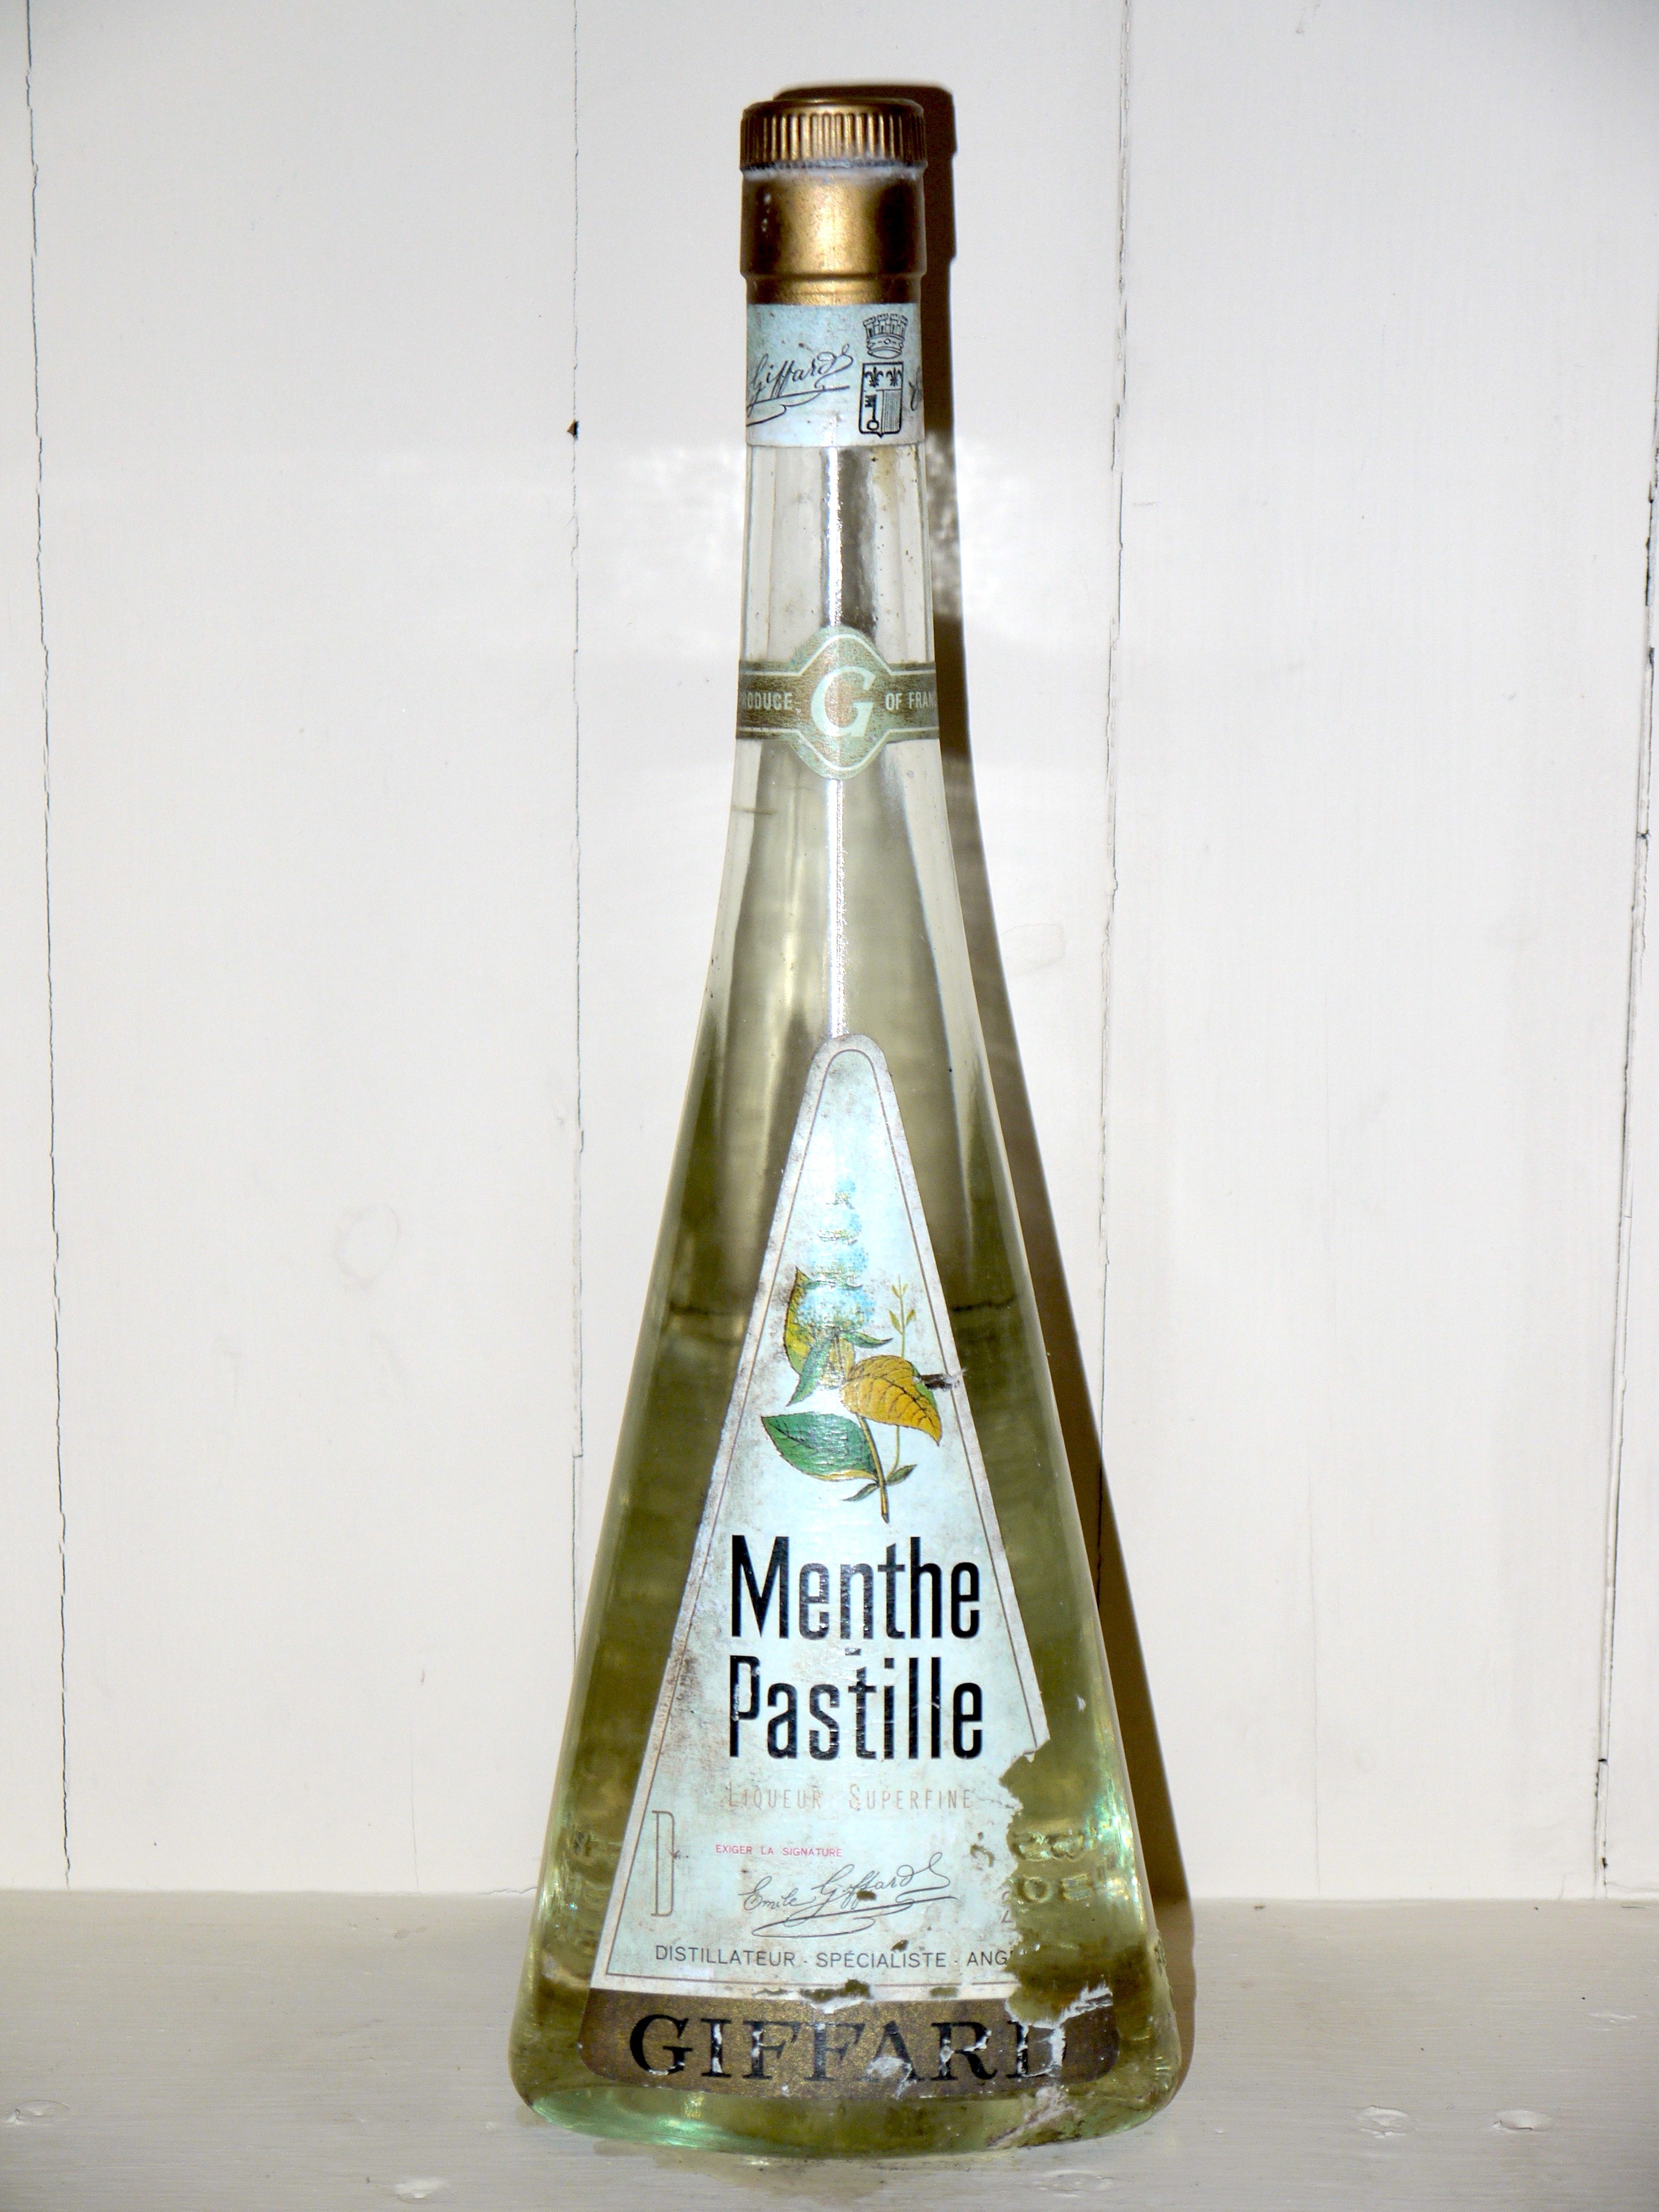 Menthe Pastille Giffard - great wine Bottles in Paradise